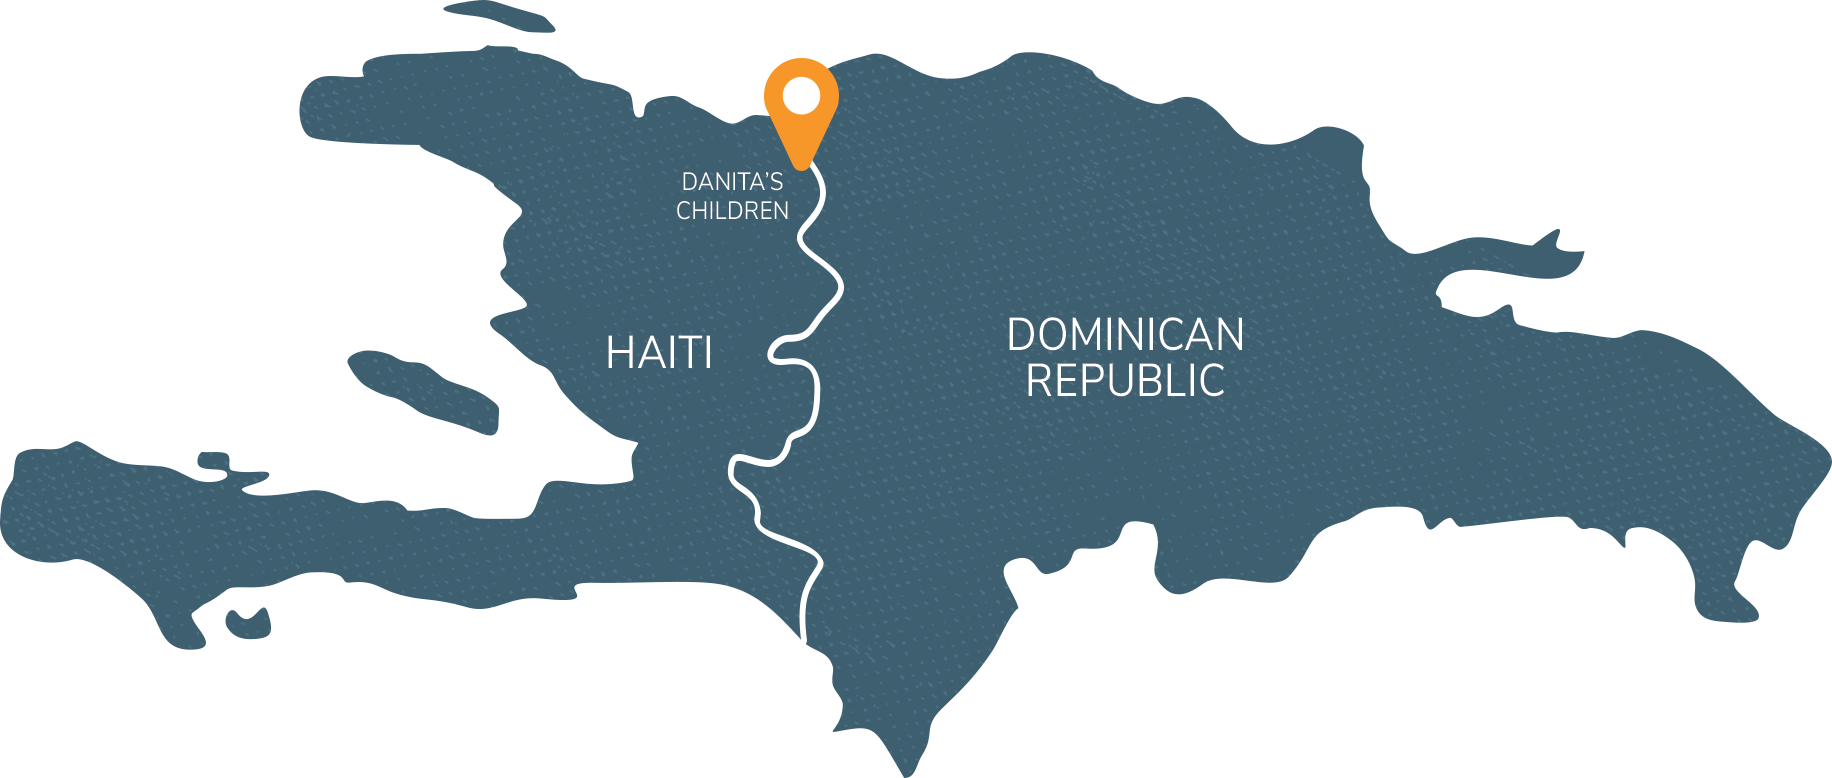 Haitiand Dominican Republic Mapwith Danitas Children Location